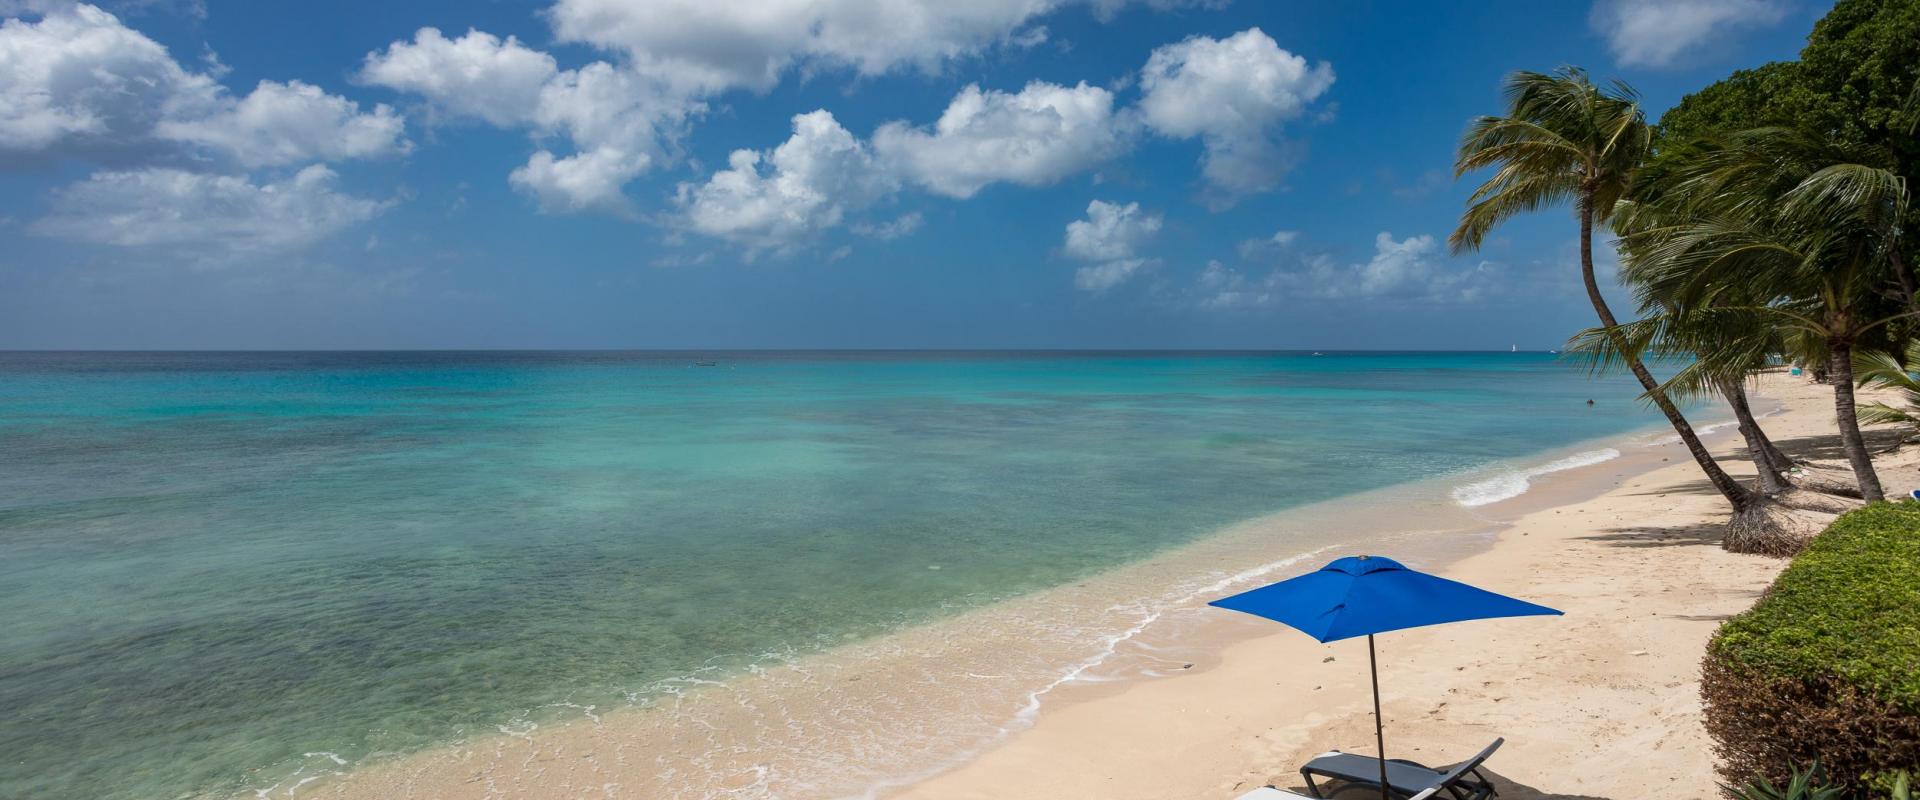 Barbados Vacation Villa Dolphin Beach House Beach and Ocean infront of Property 